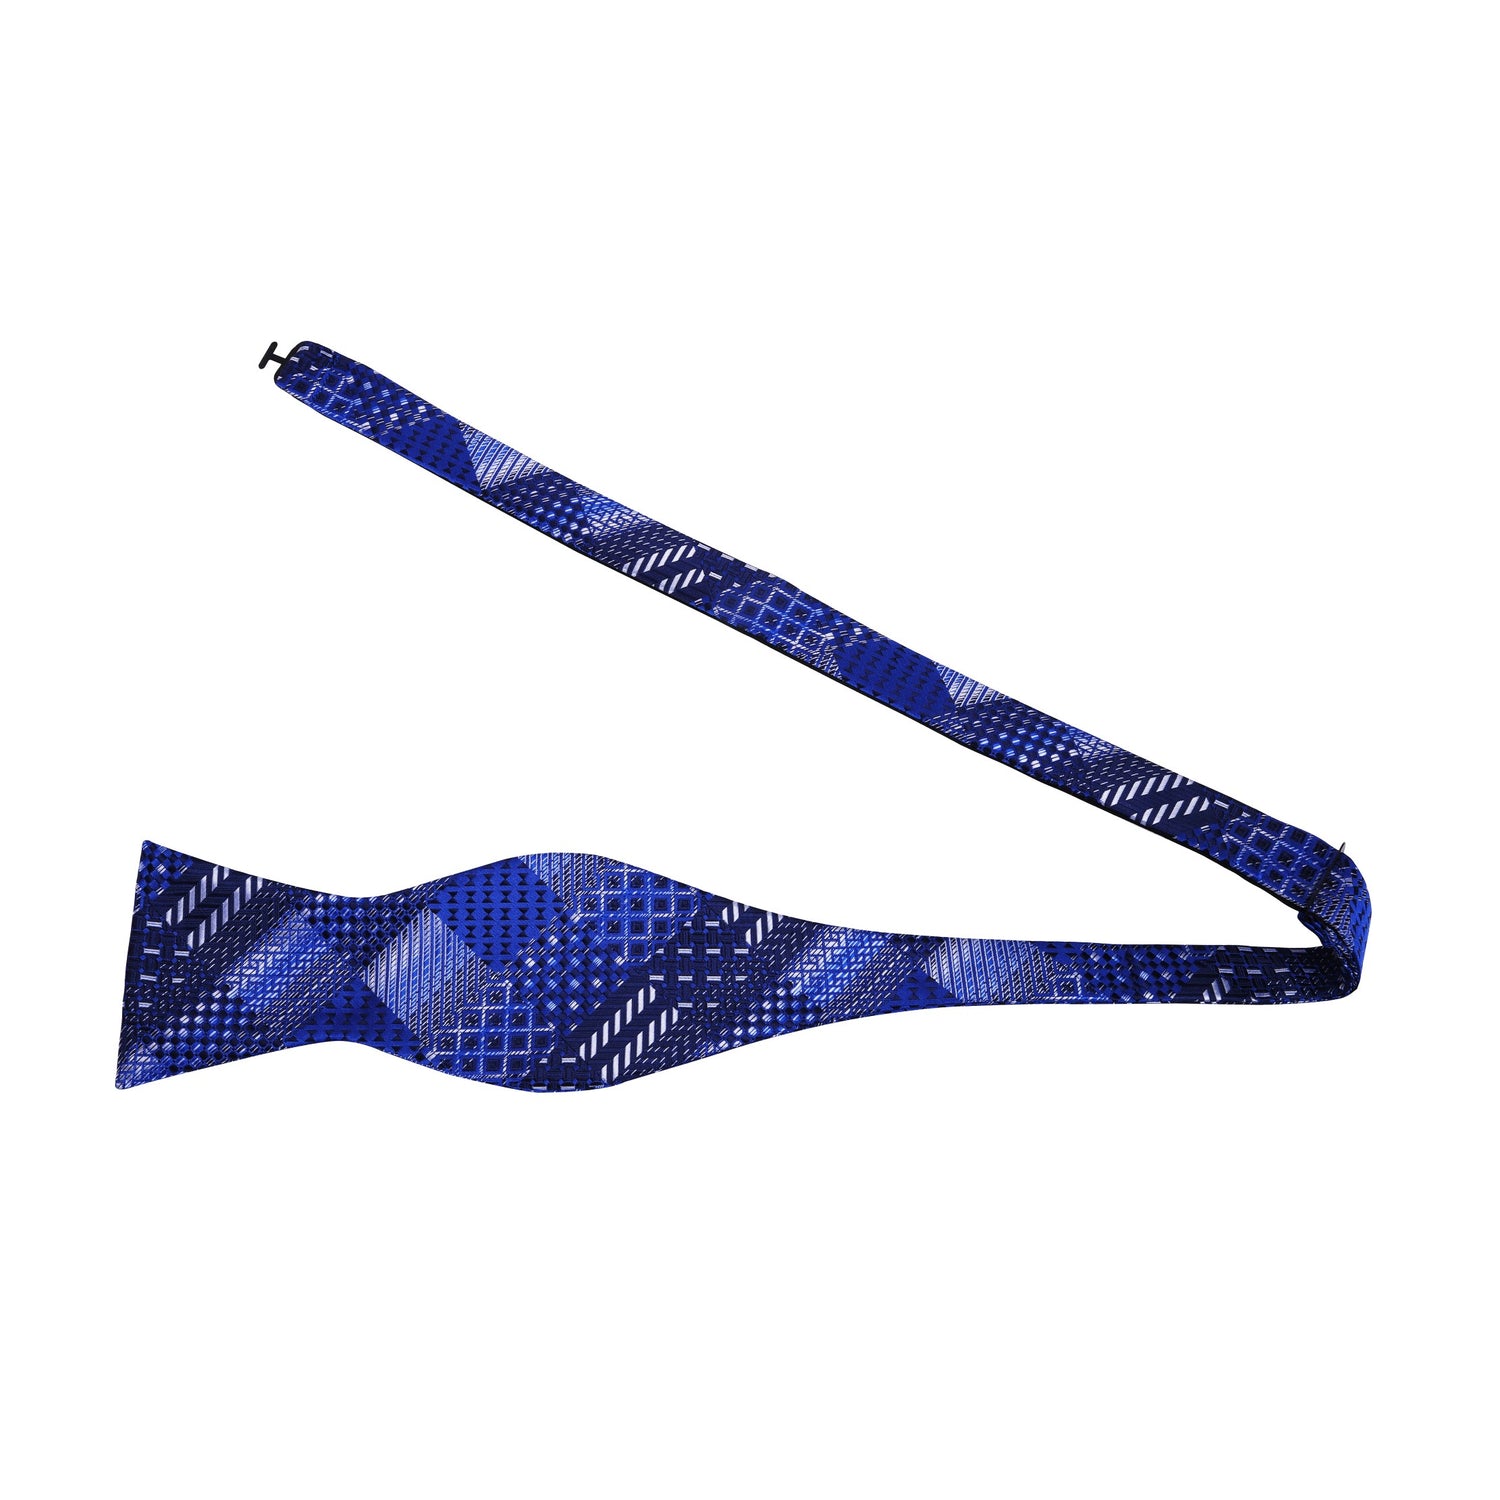 Untied: A Blue Abstract Diamond Shape Pattern Silk Self Tie Bow Tie